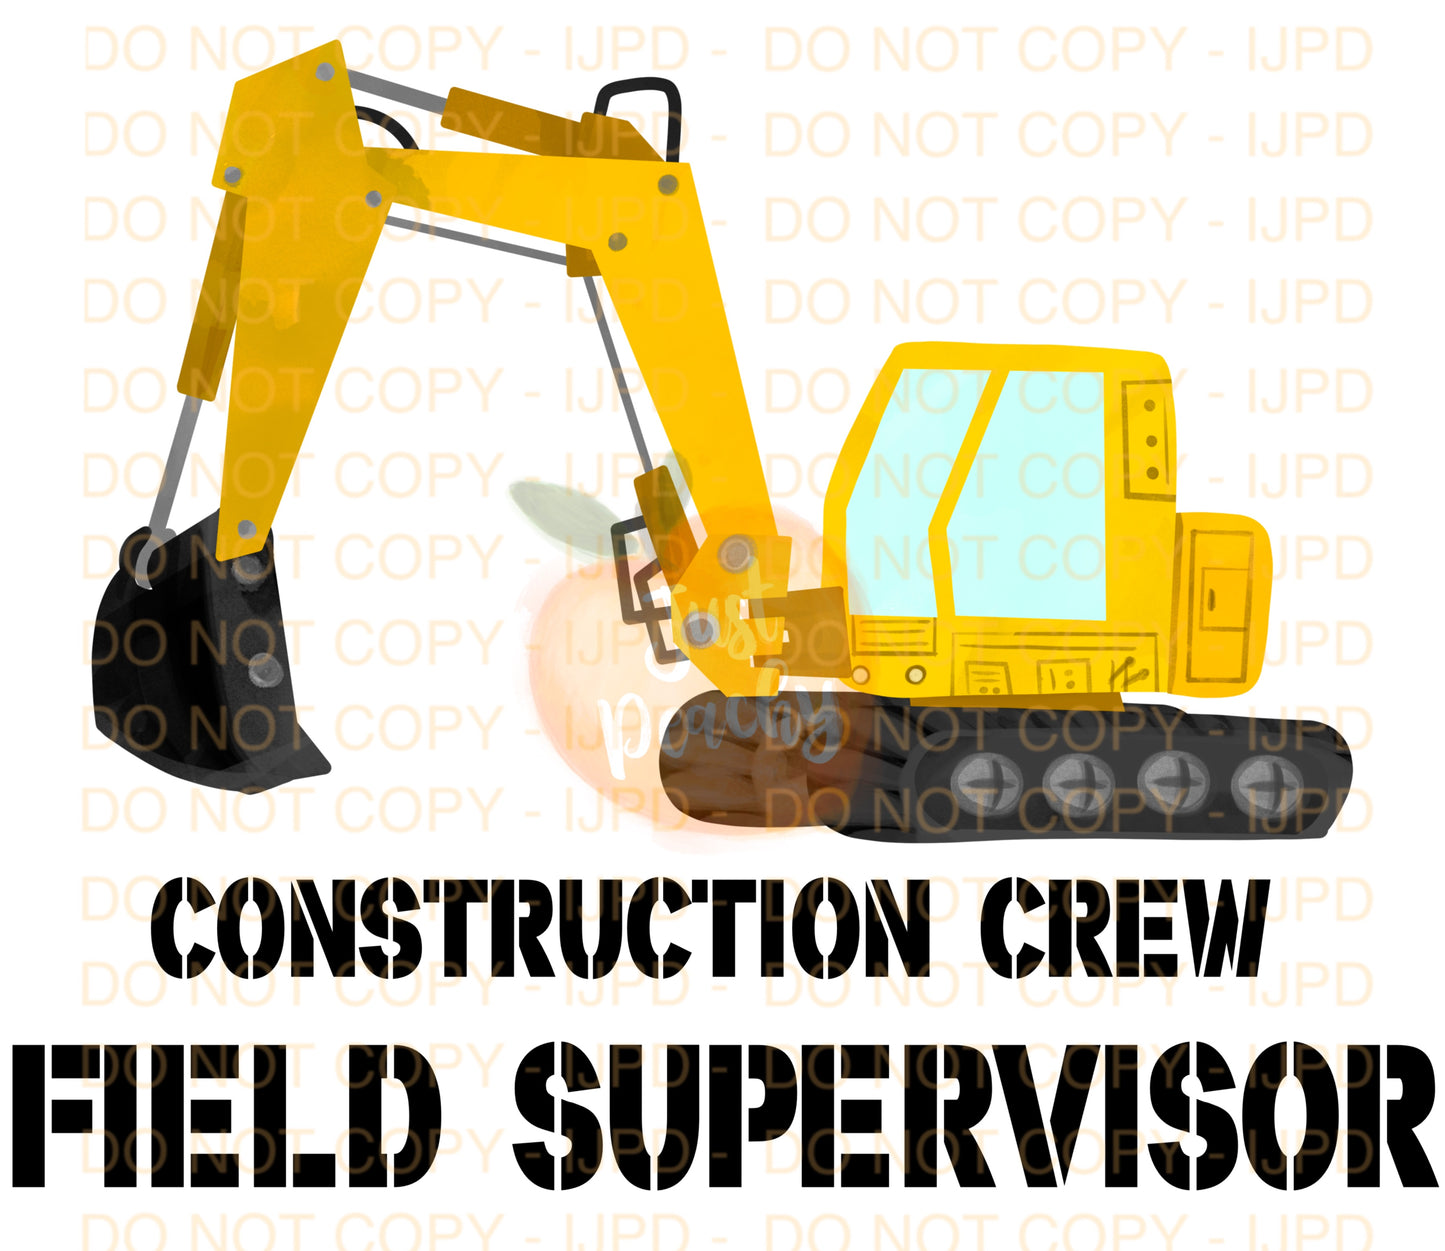 Field Supervisor PNG - Multiple Options